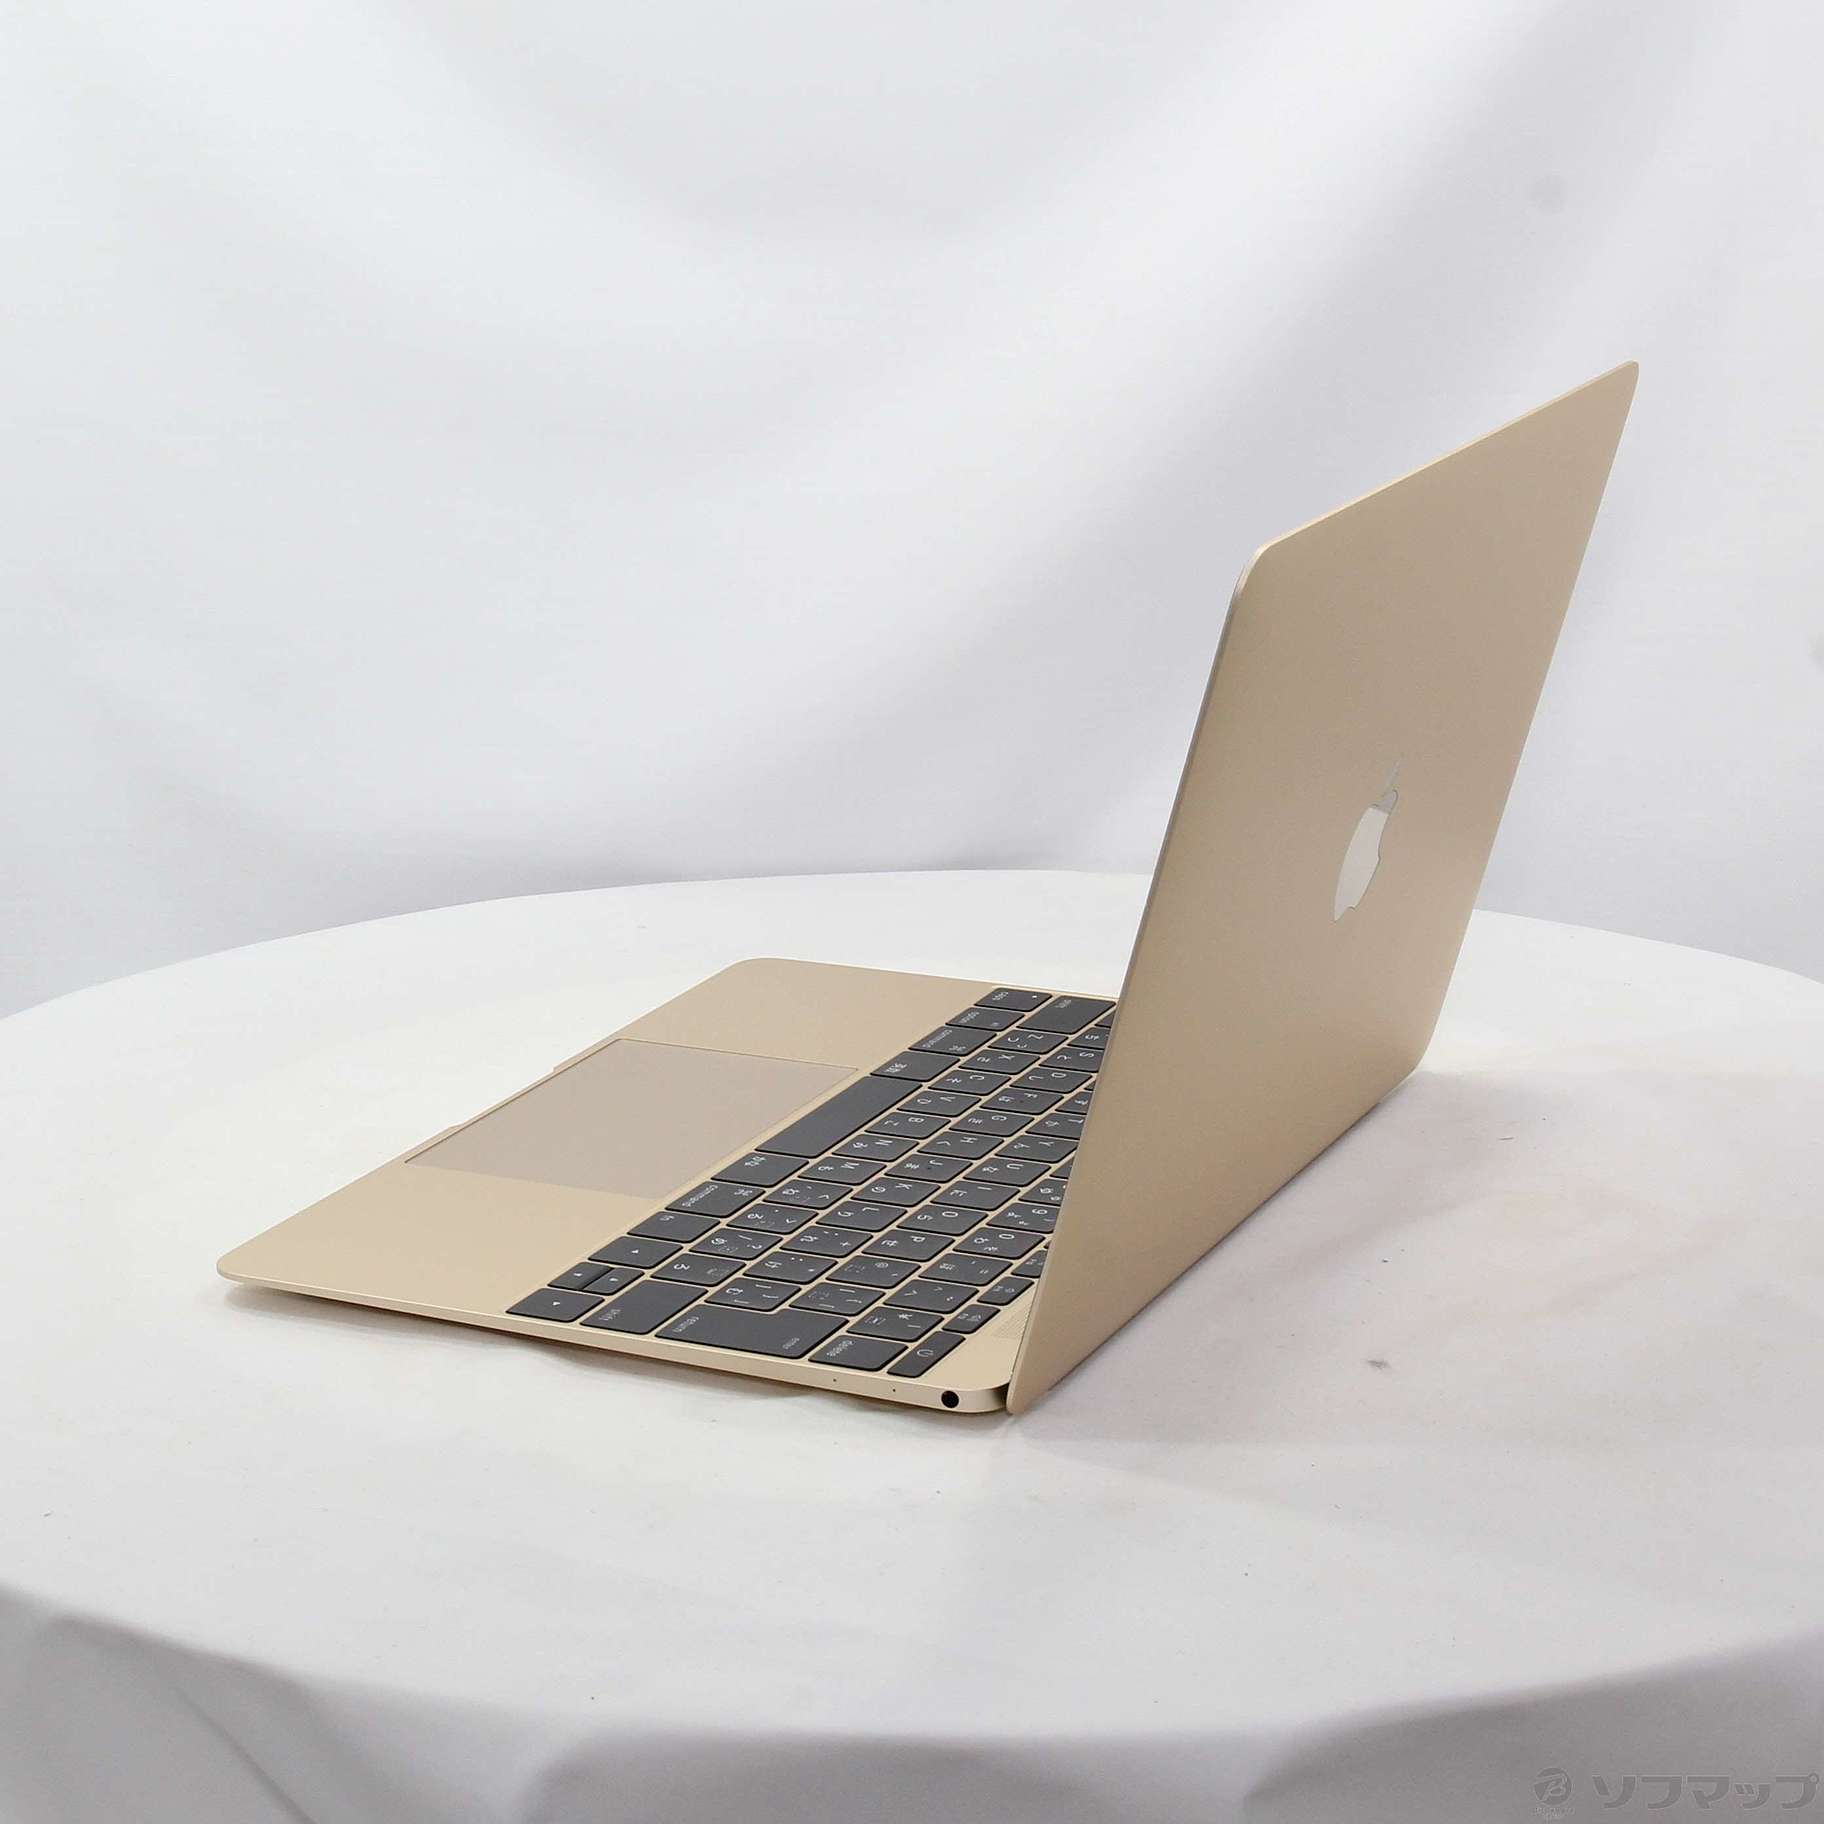 MacBook 2015 12インチ ゴールド